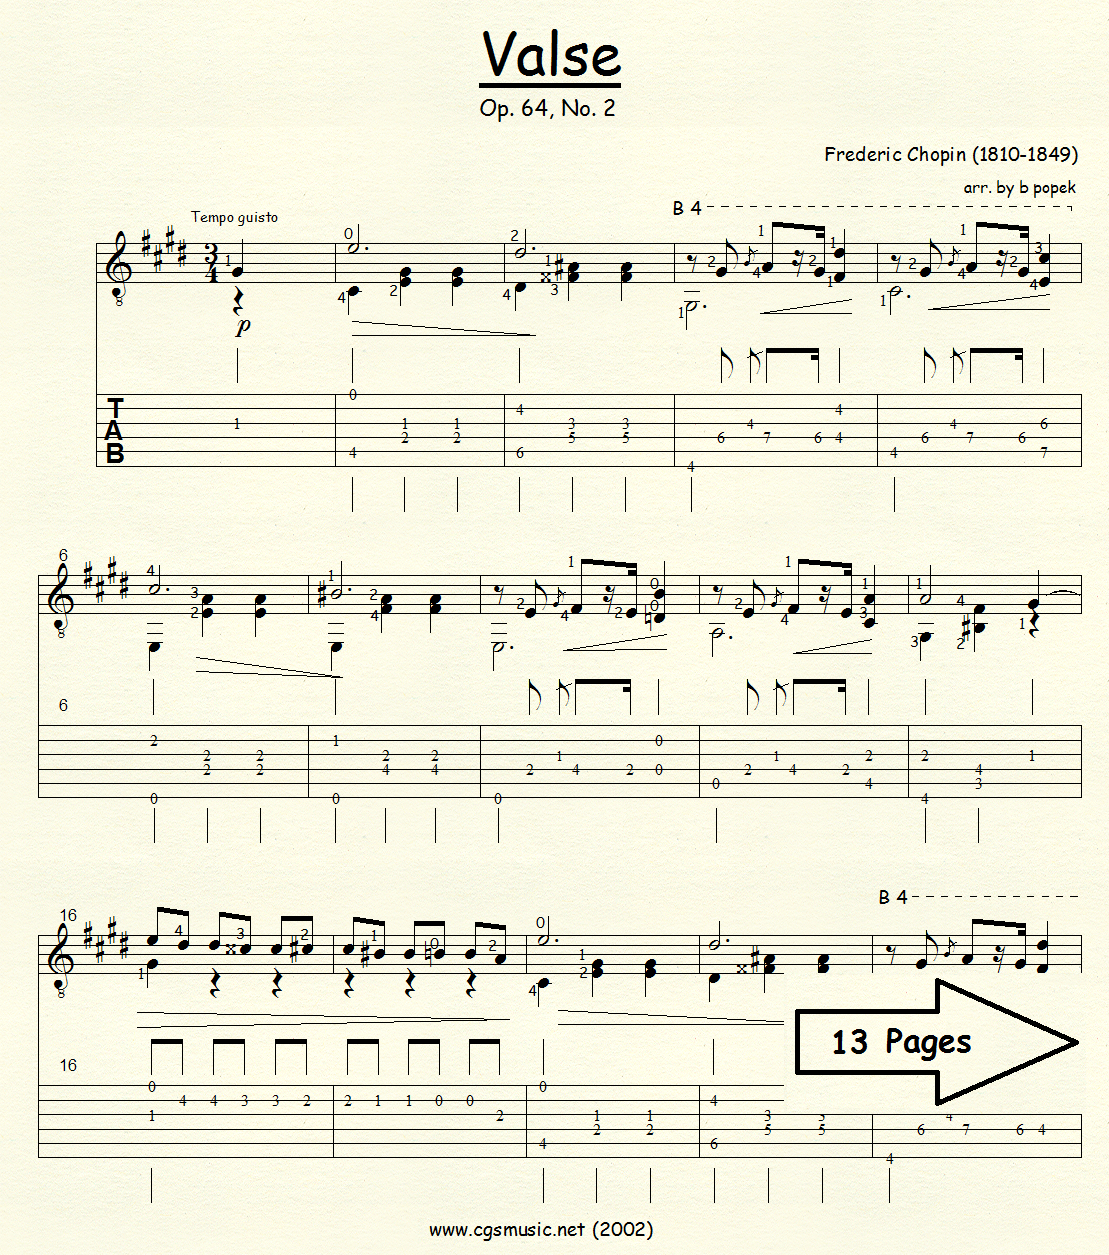 Valse Op 64 #2 (Chopin) for Classical Guitar in Tablature